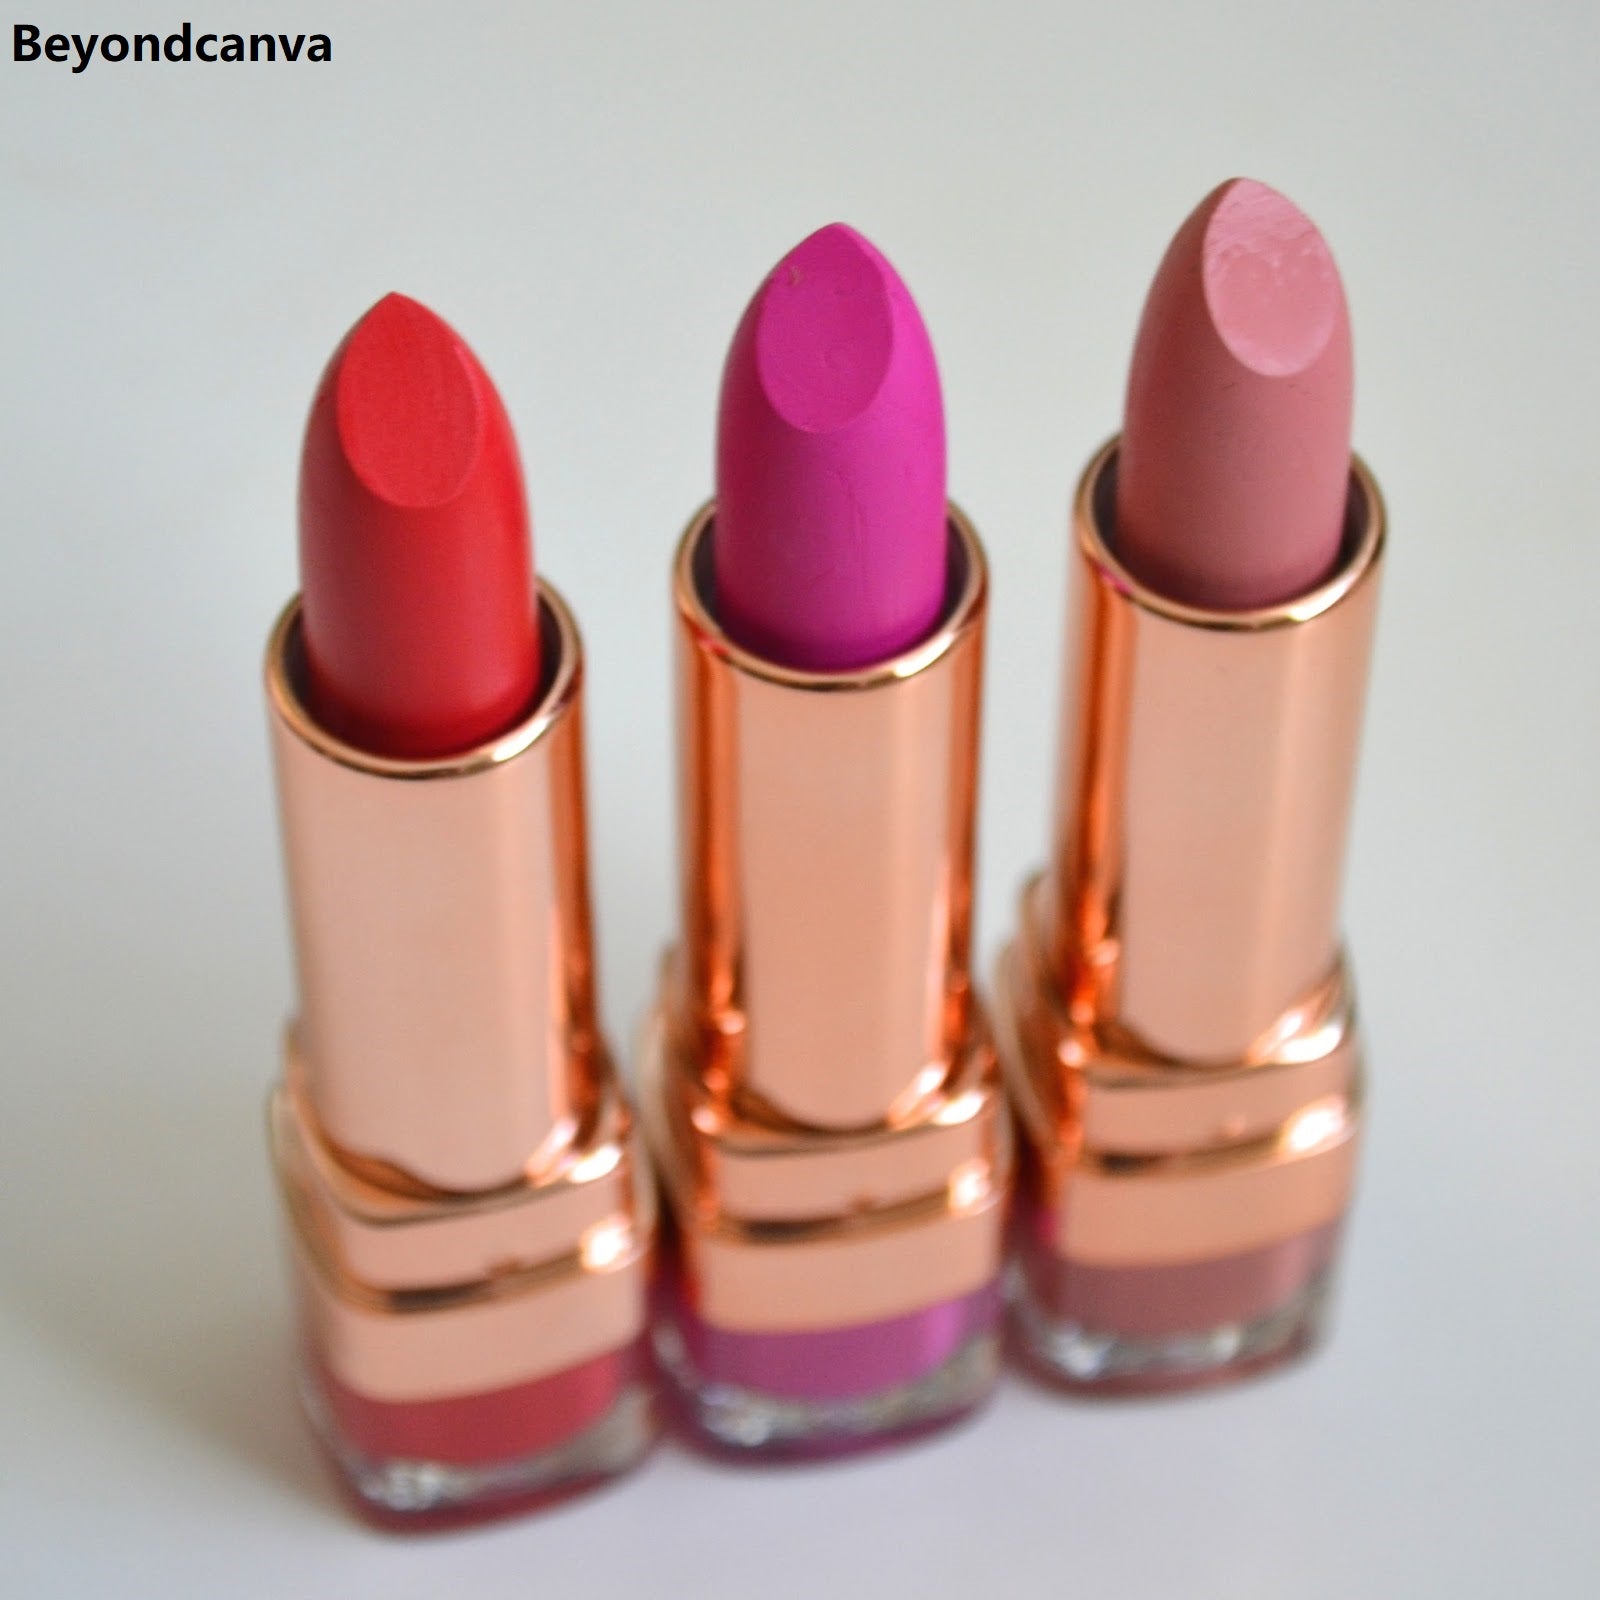 Beyondcanva Lipsticks